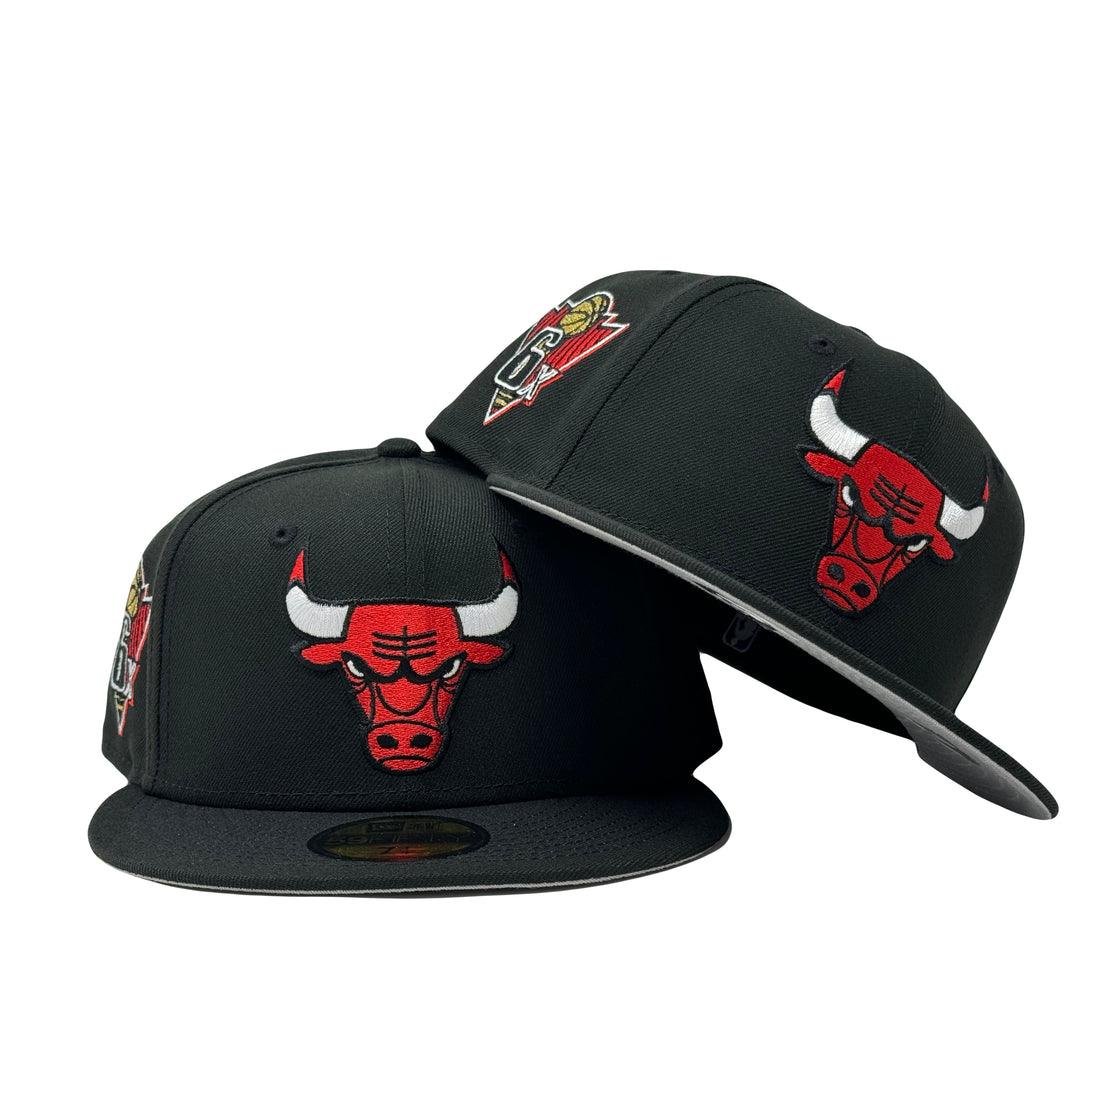 Chicago Bulls 6X NBA Champions 5950 New Era Fitted Hat Black